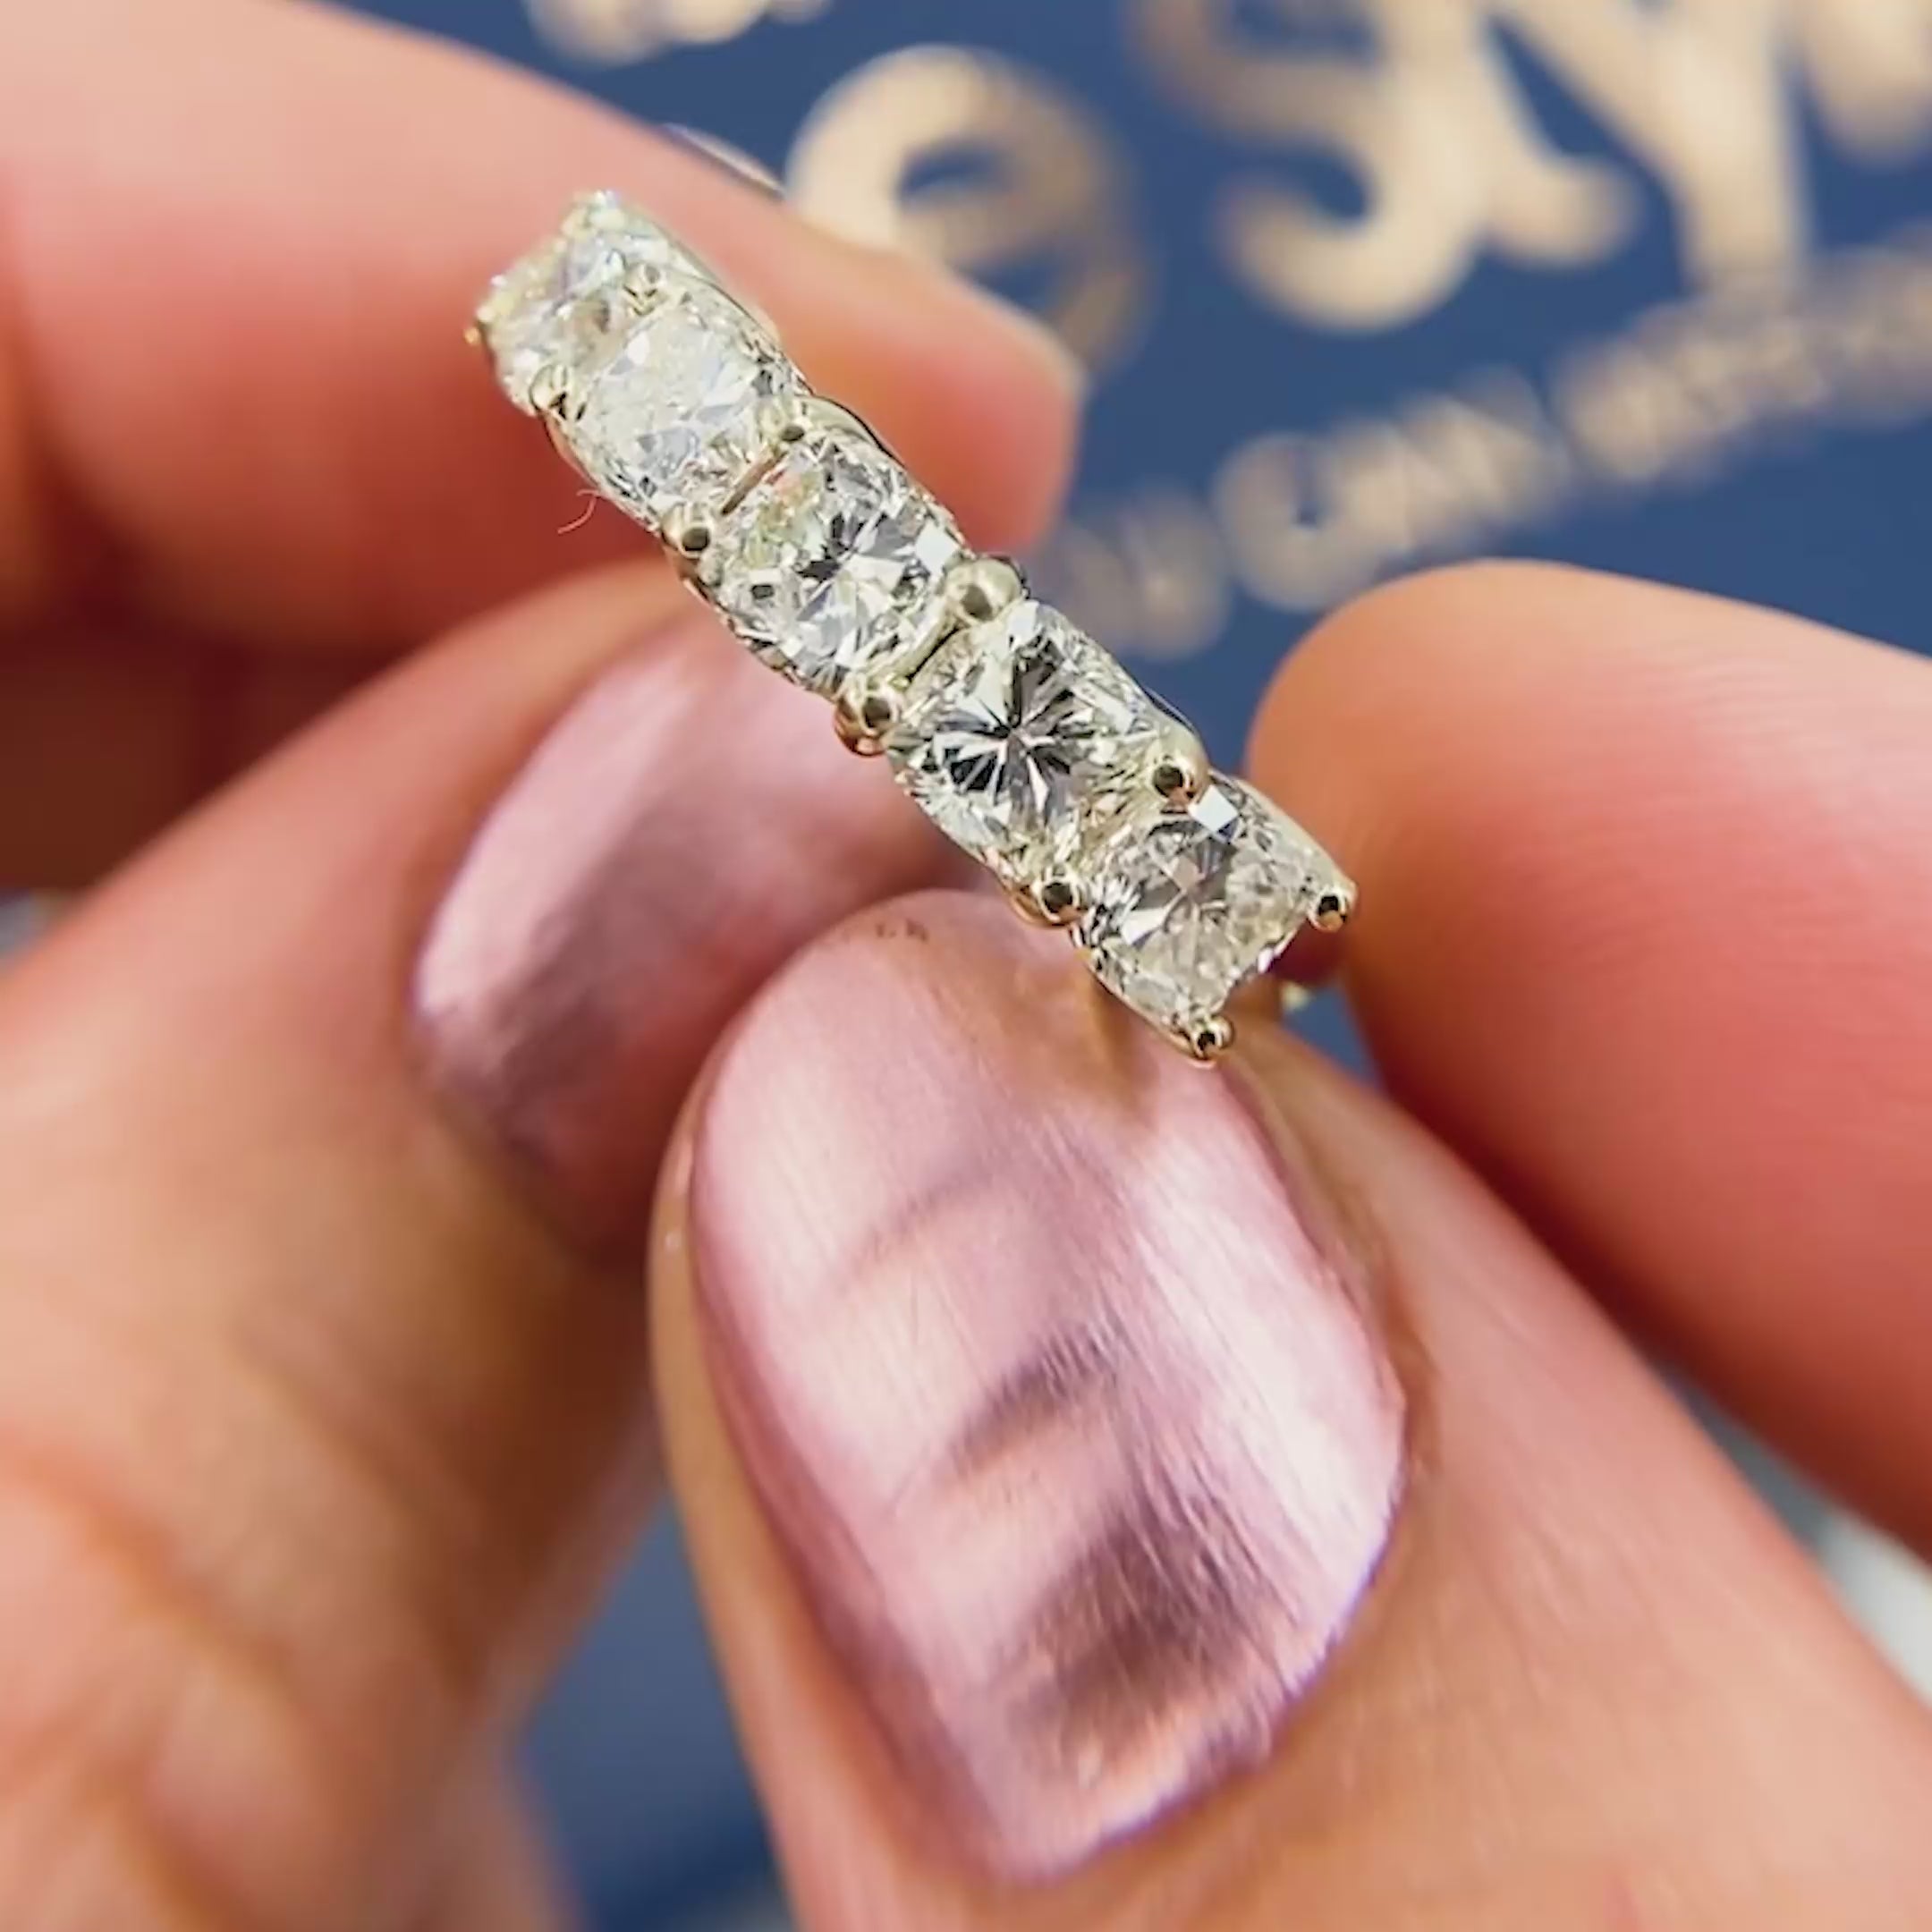 Stunning 3.75CT Cushion Cut Diamond Wedding Ring in 18KT Yellow Gold